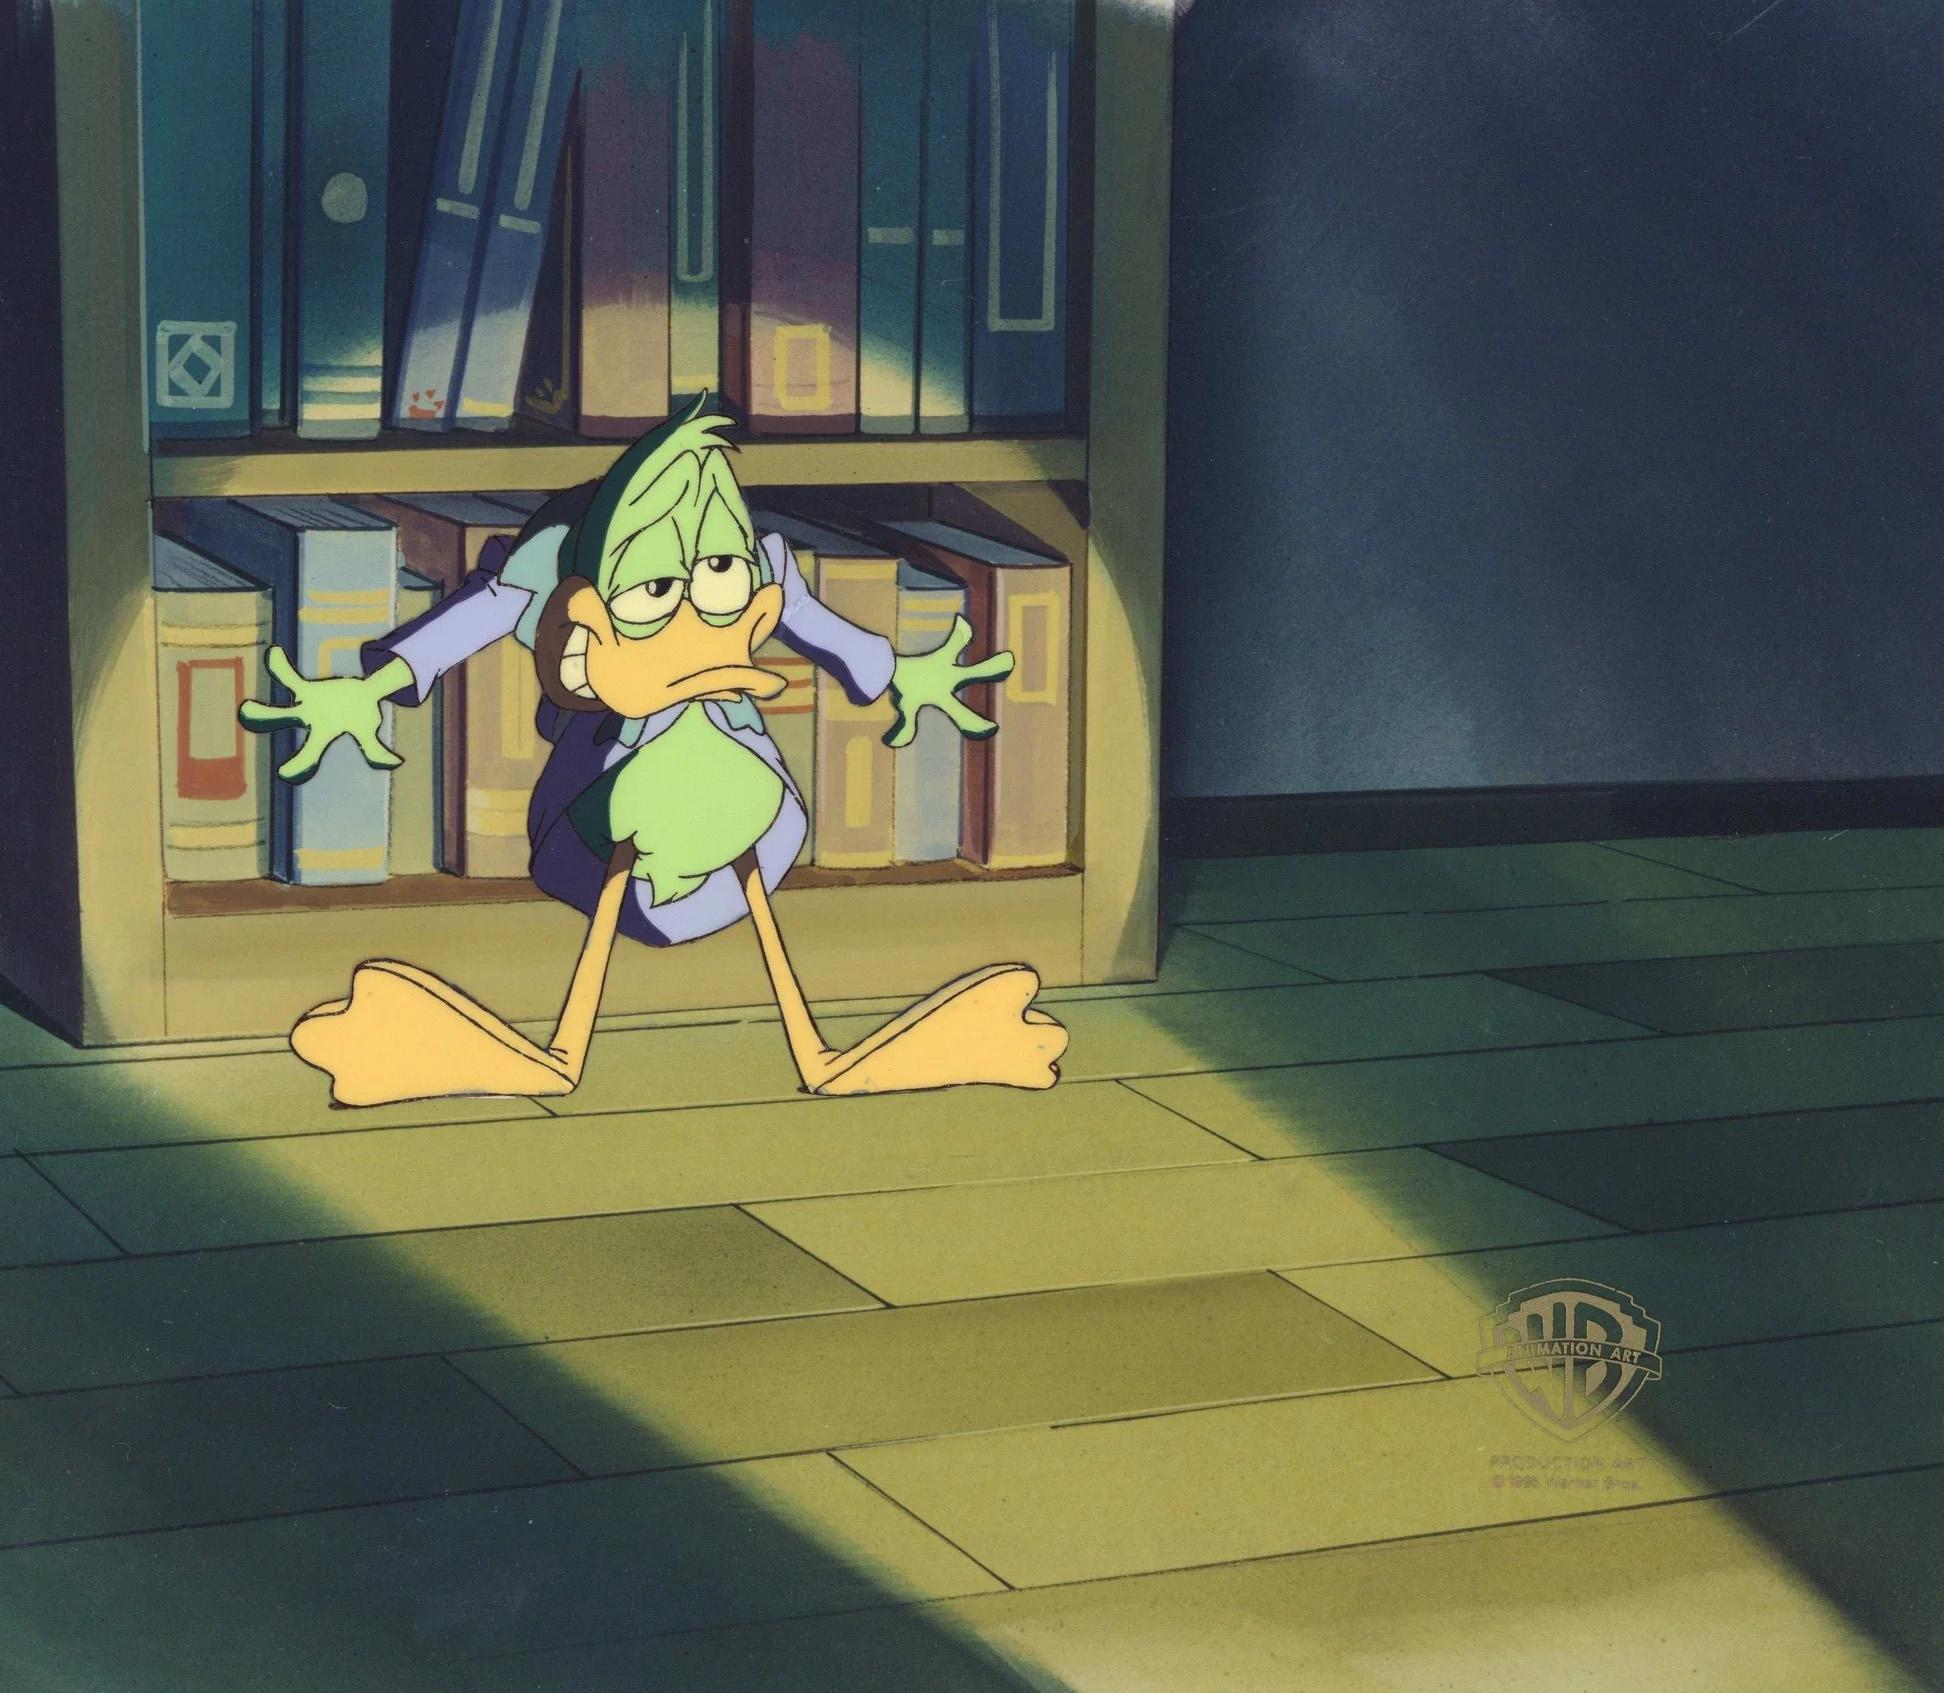 Tiny Toons Original Production Cel: Plucky Duck - Art by Warner Bros. Studio Artists